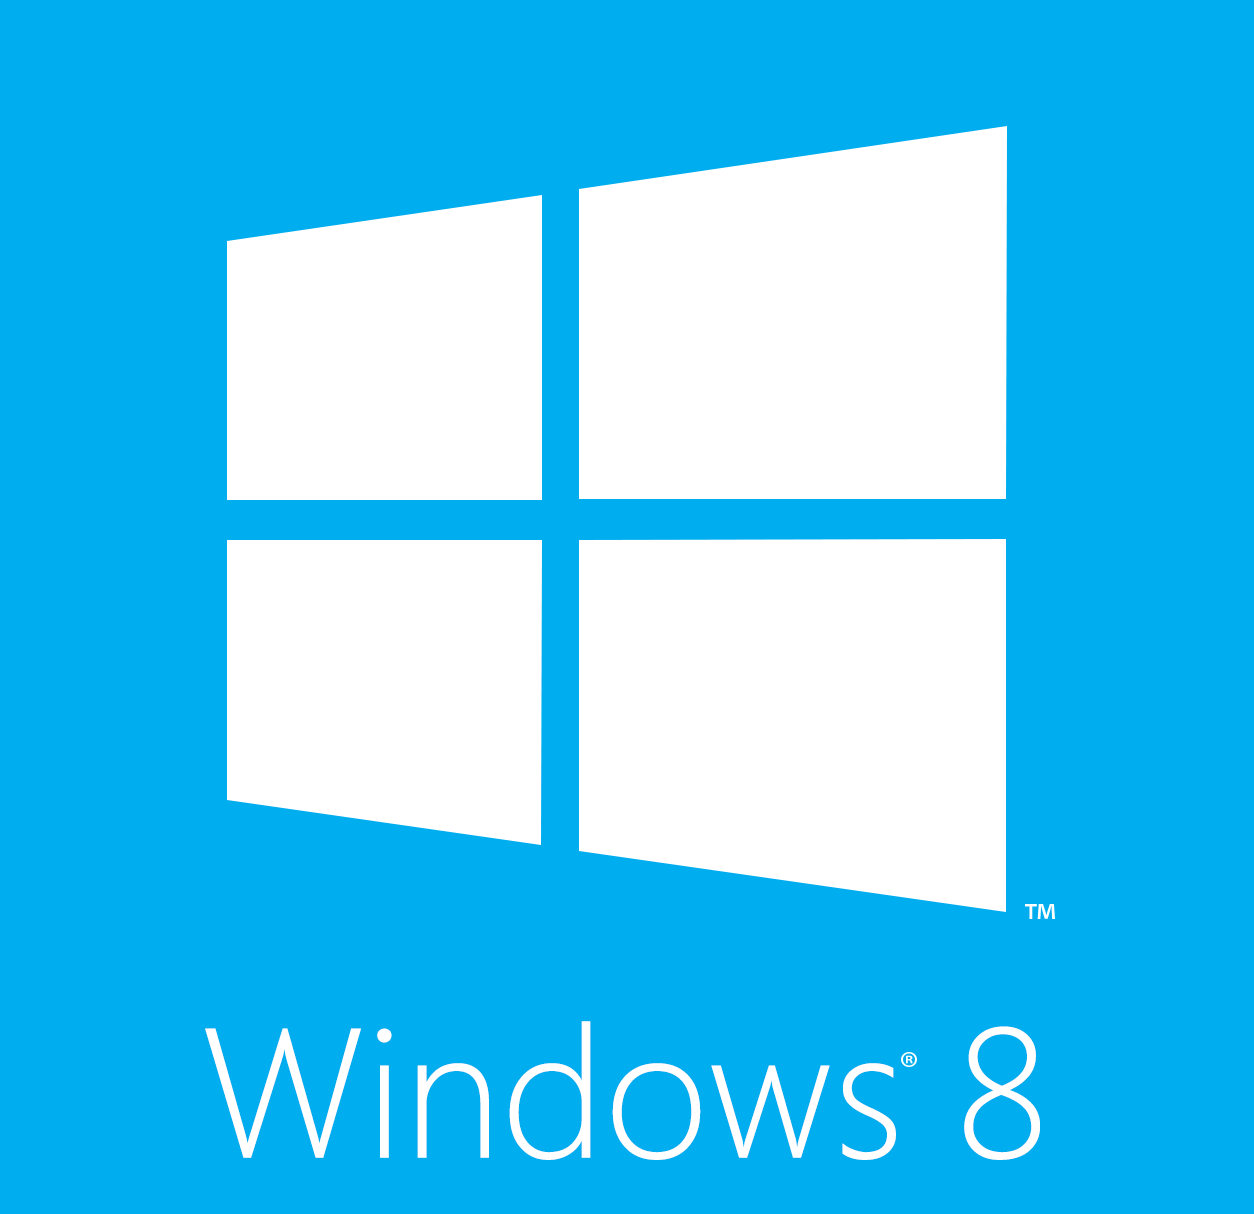 Win 8 Logo - Tutorial 1 your new Windows 8 PC. Top Windows Tutorials